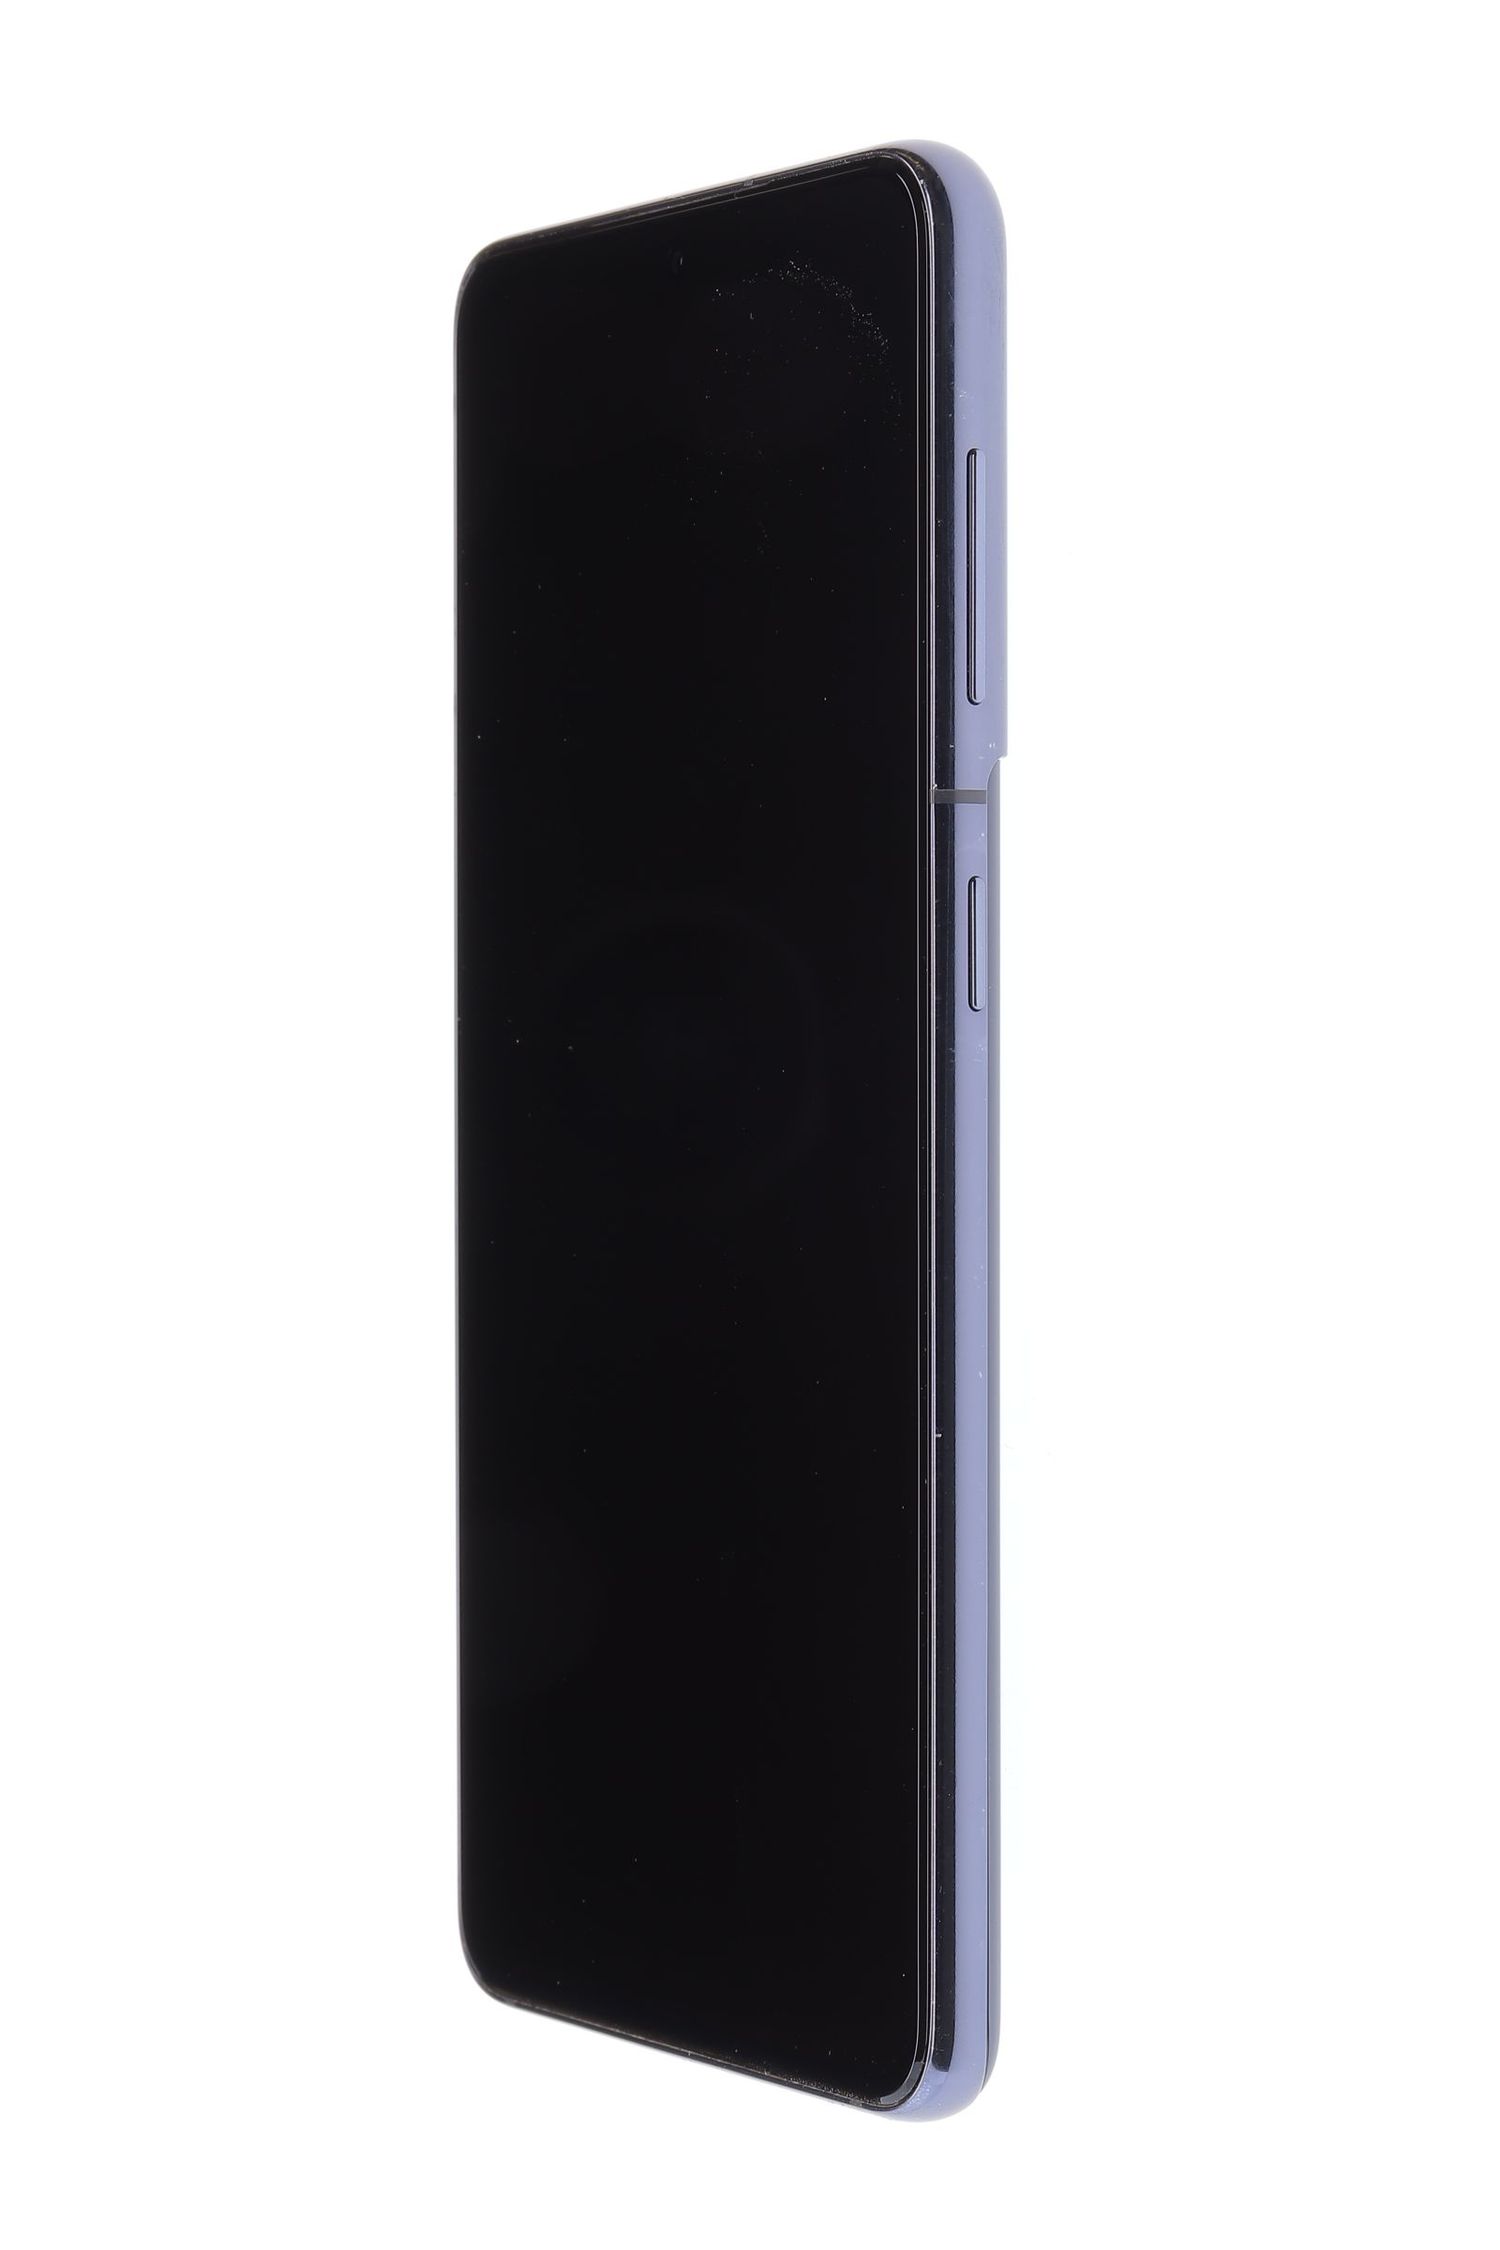 Мобилен телефон Samsung Galaxy S21 5G Dual Sim, Gray, 256 GB, Foarte Bun